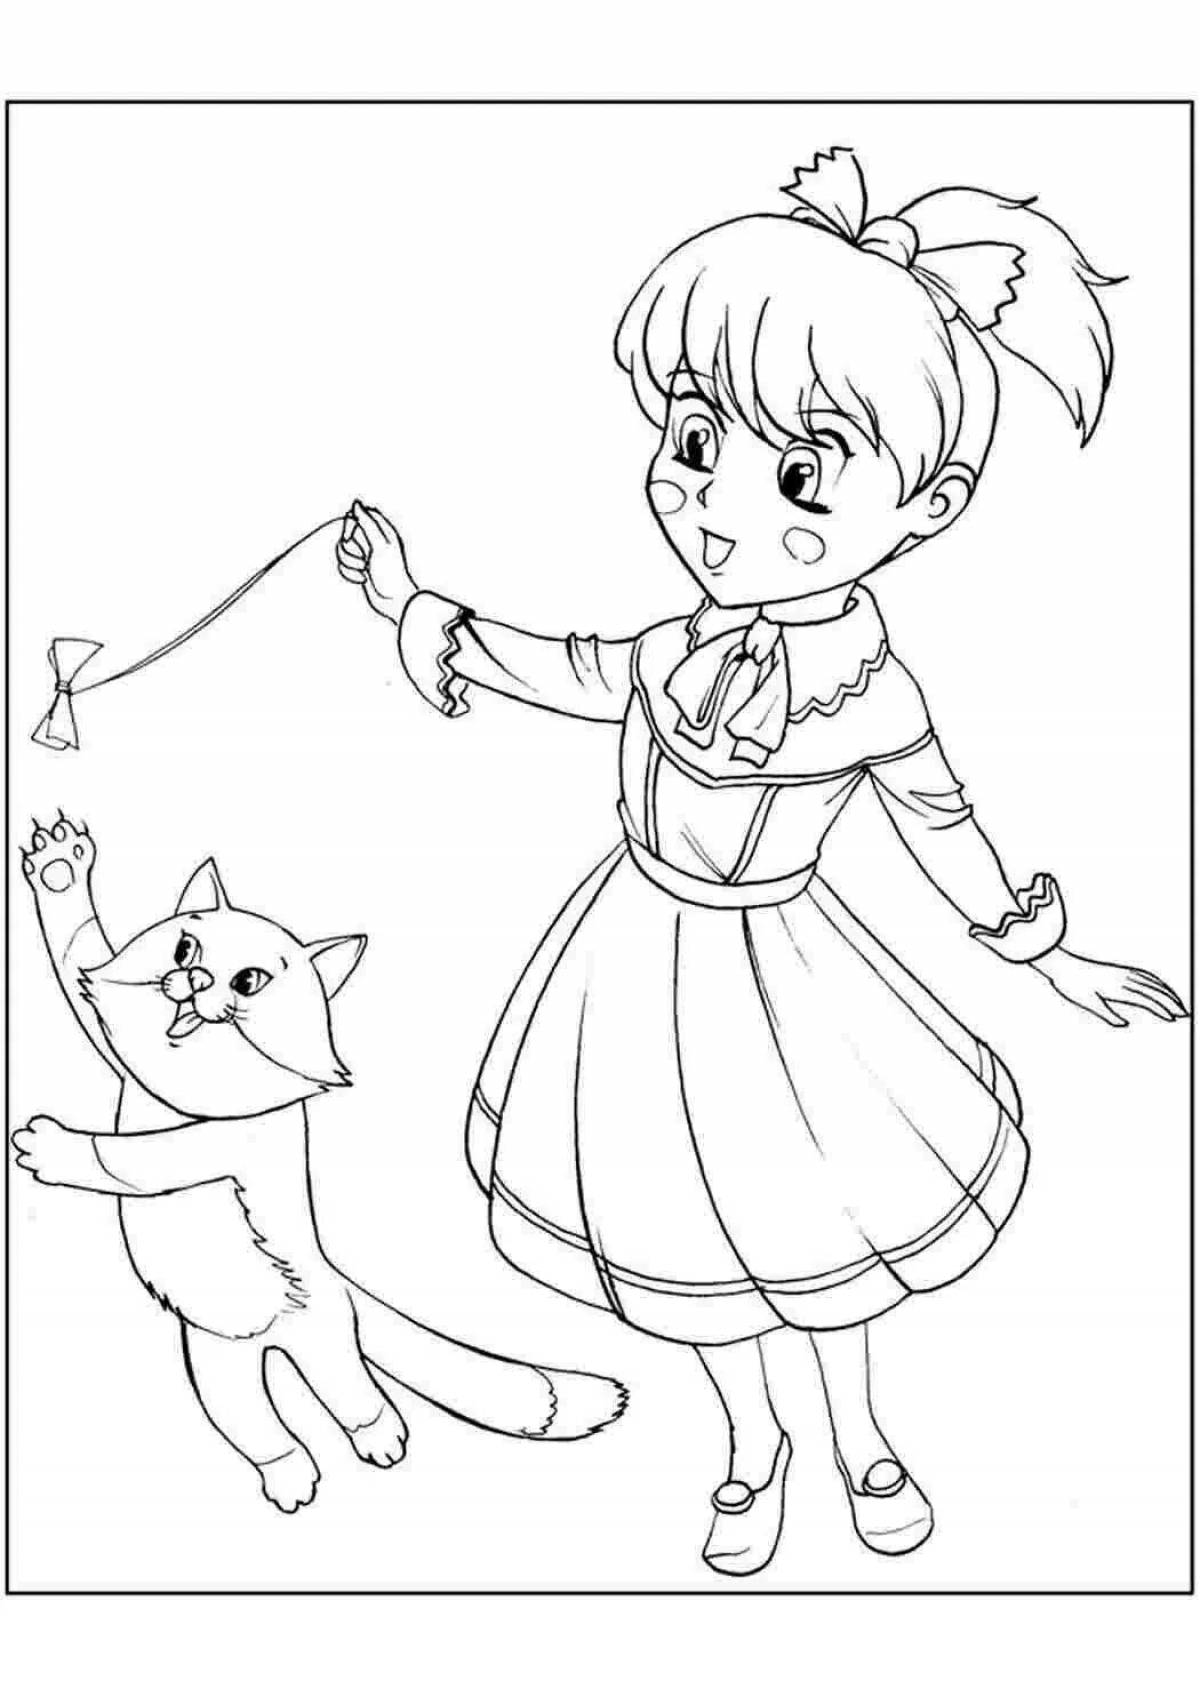 Joyful coloring girl with a cat